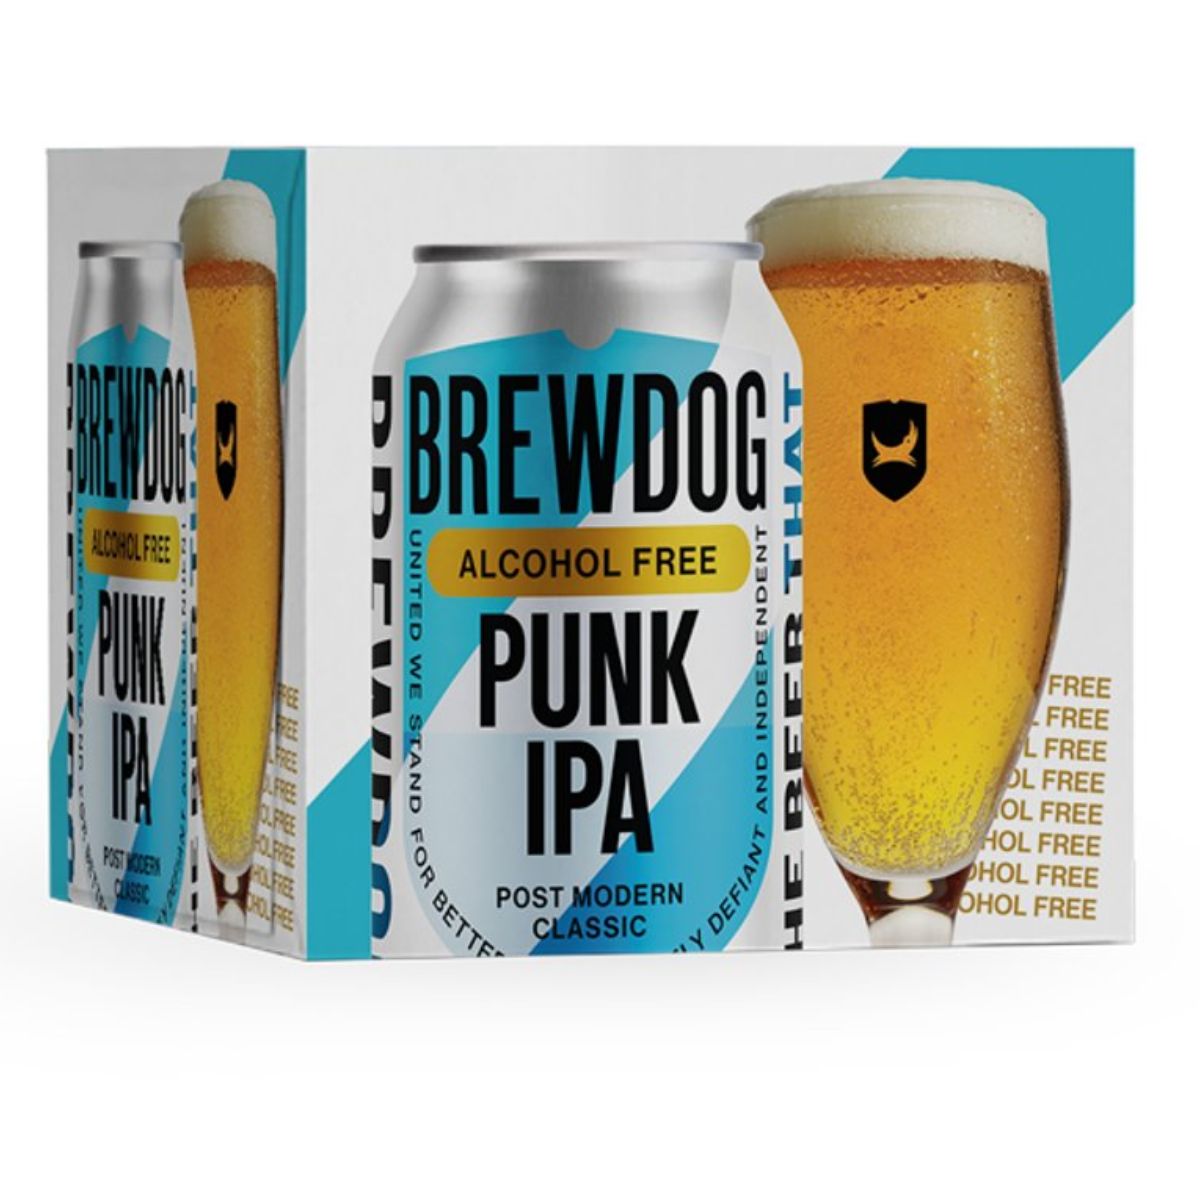 BrewDog - Punk Alcohol Free IPA (0.5% ABV) - 4 x 330ml alcohol free punk ipa.